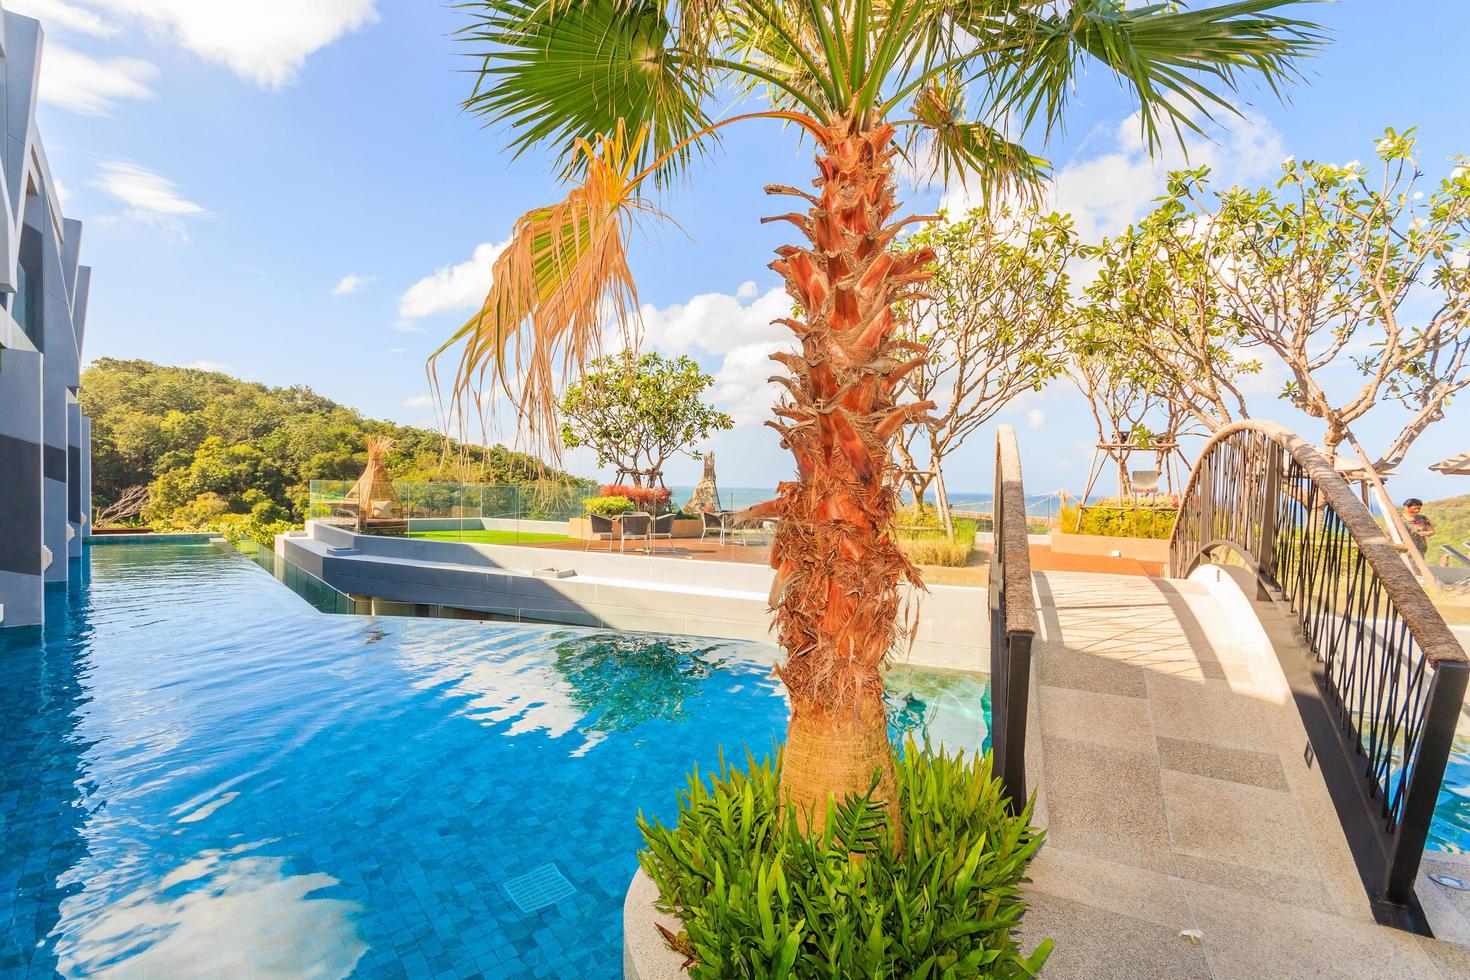 piscina no resort crest e villas e resorts com piscina, phuket, tailândia, 2017 foto